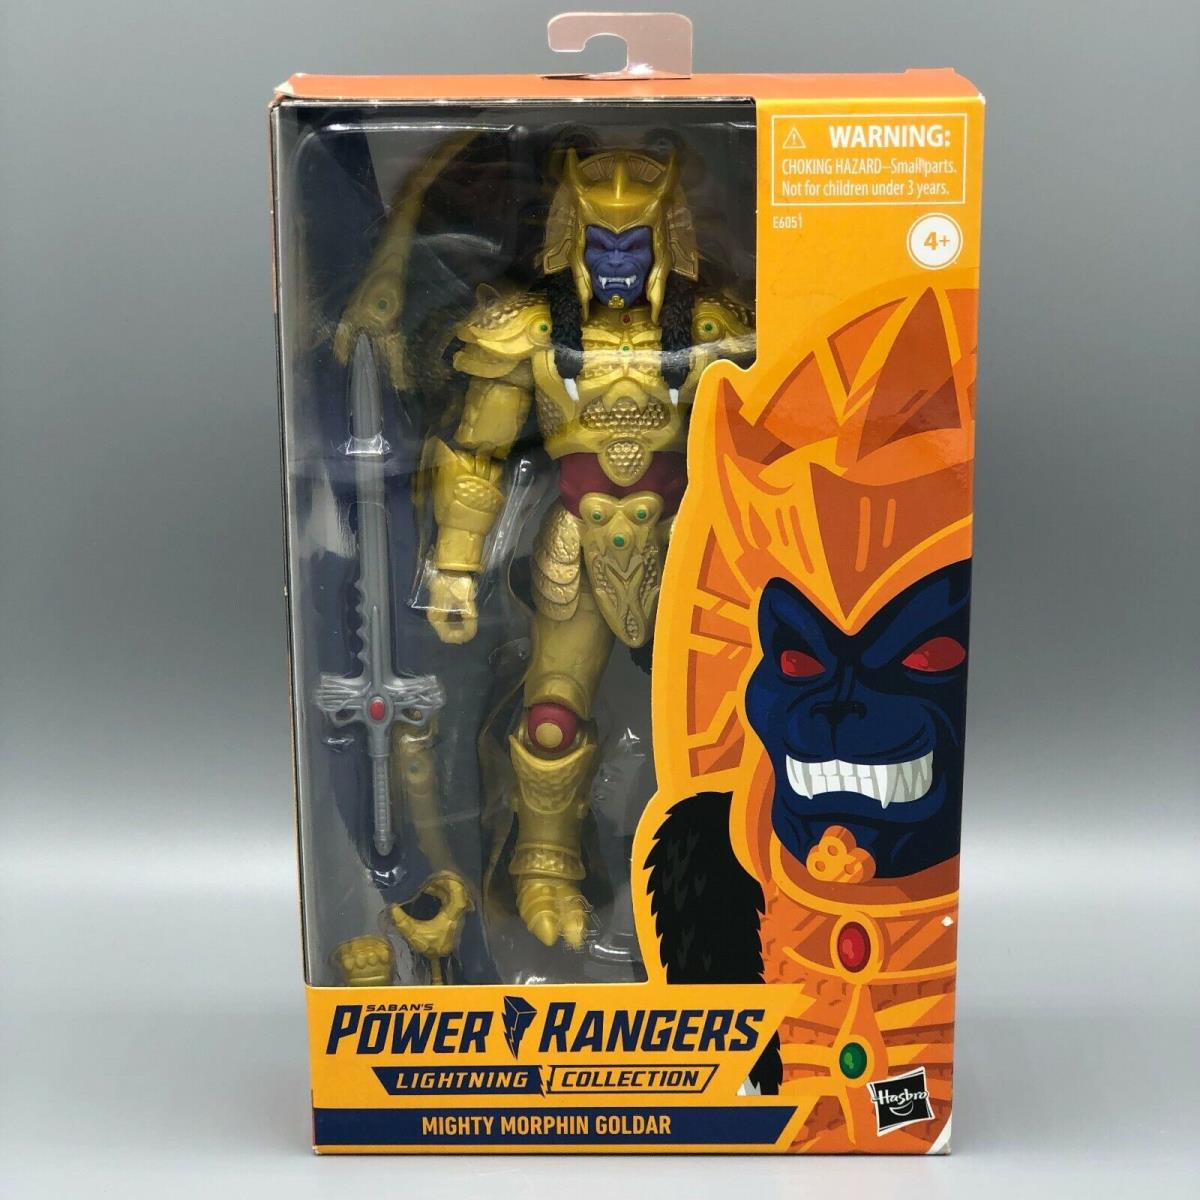 Mighty Morphin Power Rangers Goldar Lightning Collection Action Figure - Hasbro